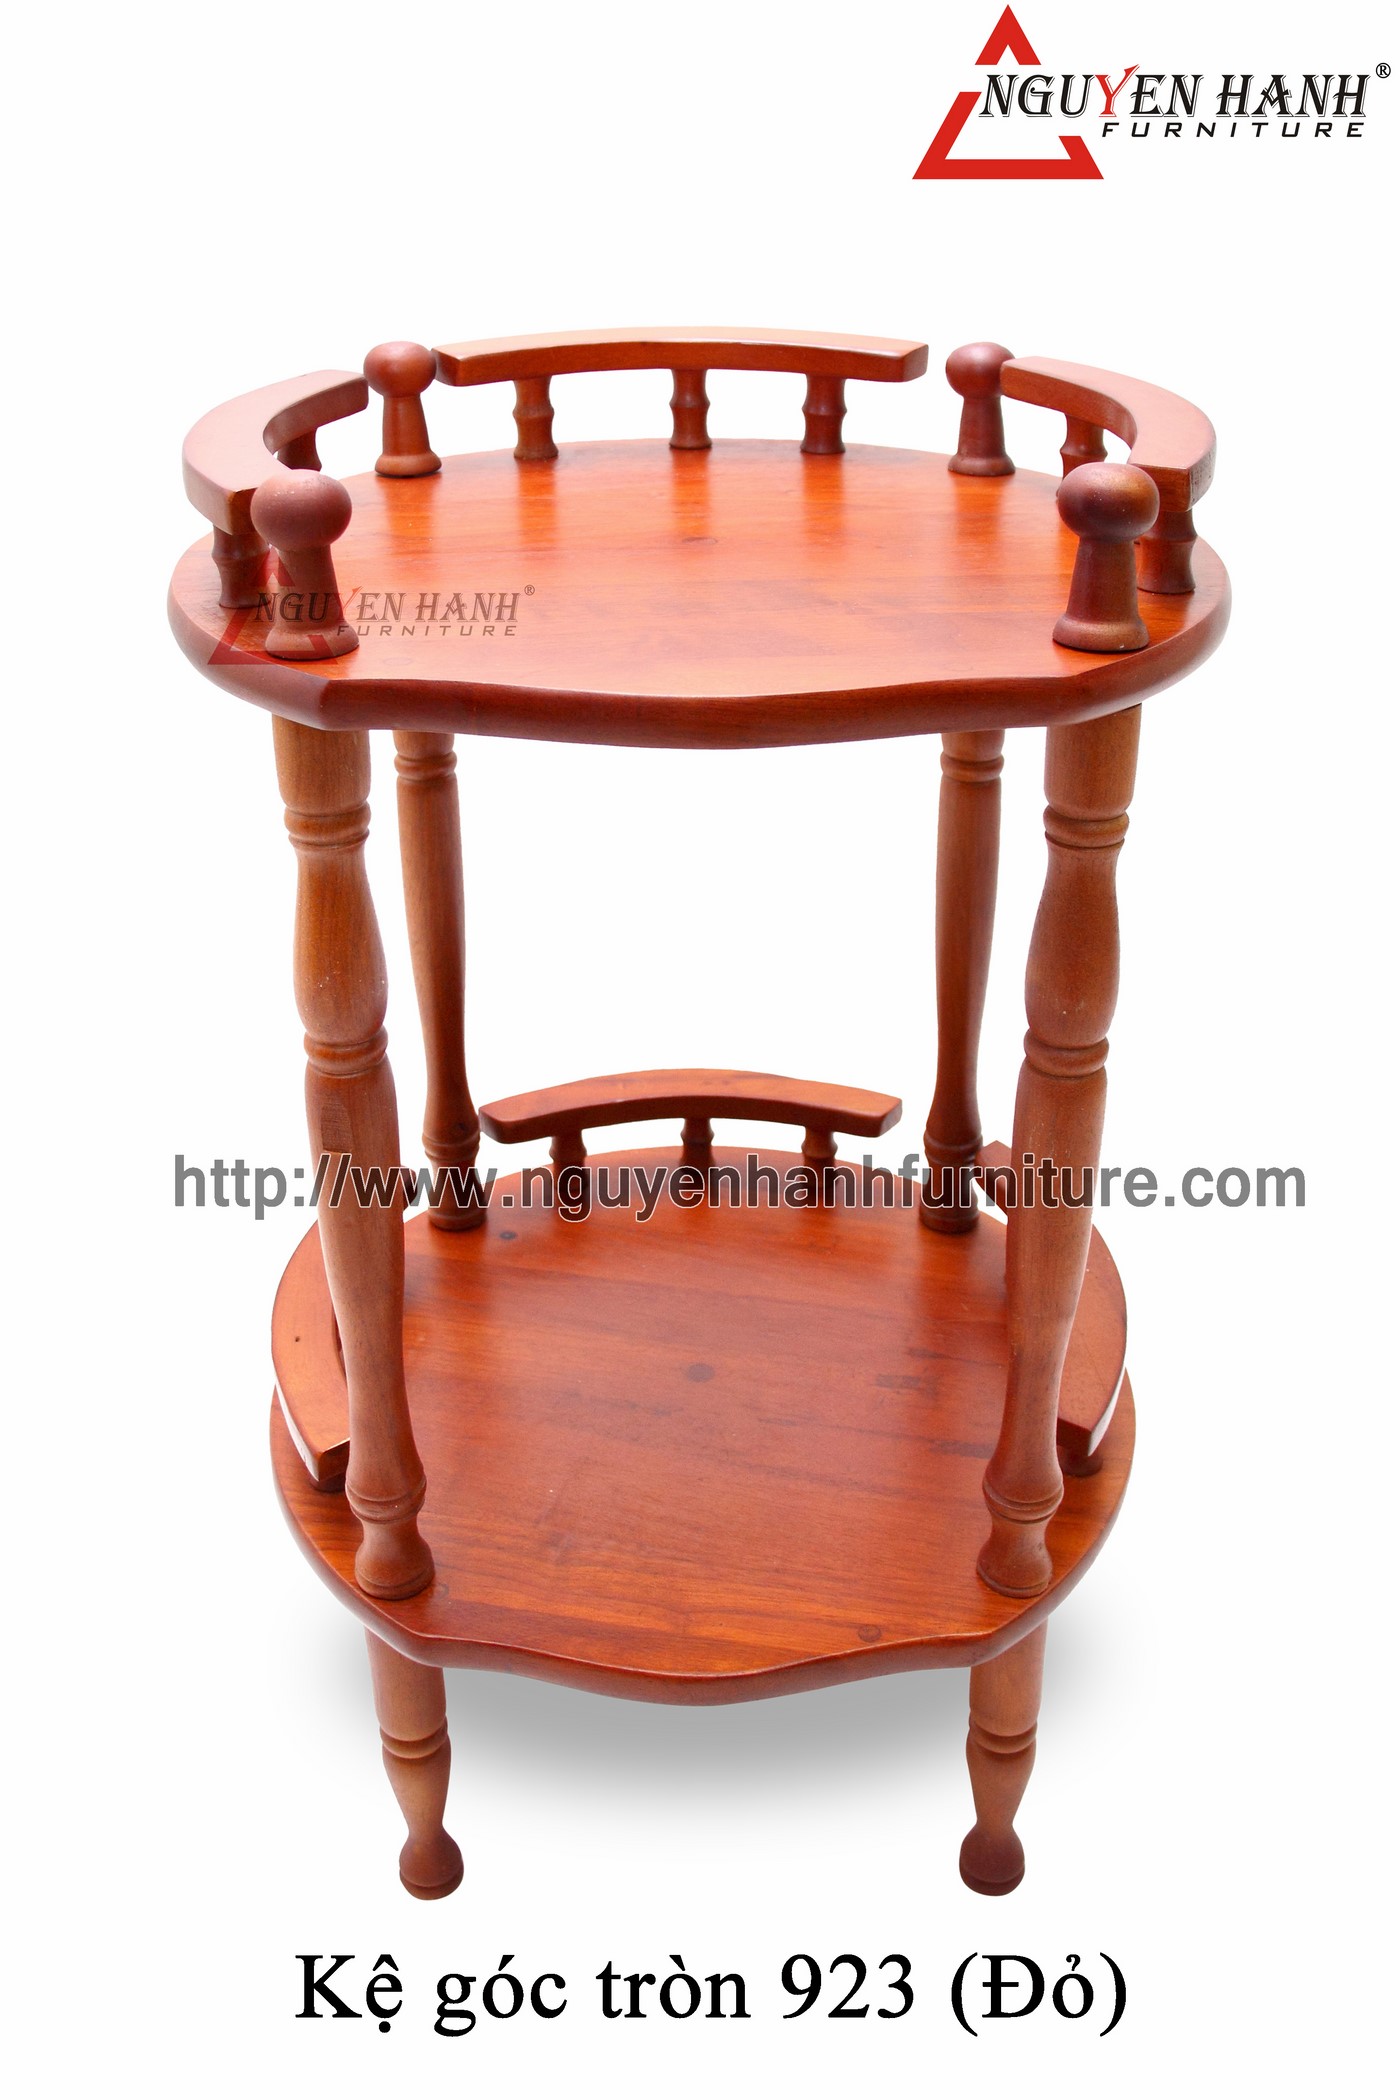 Name product: Round Corner Shelf 923 - Dimensions: 68 x 38 - Description: Wood natural rubber